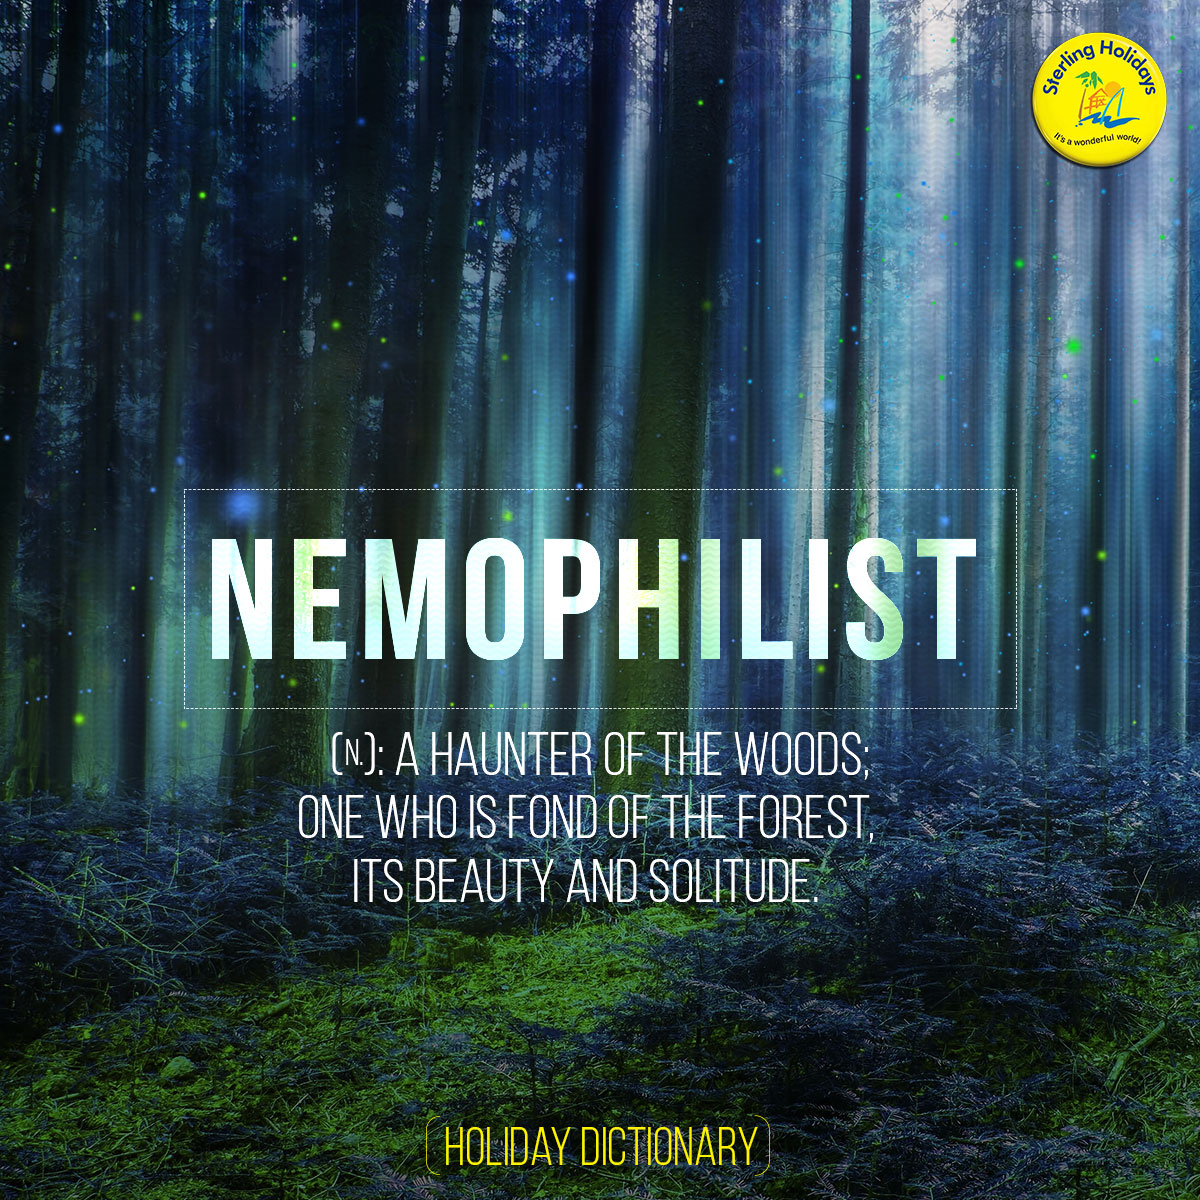 Nemophilist